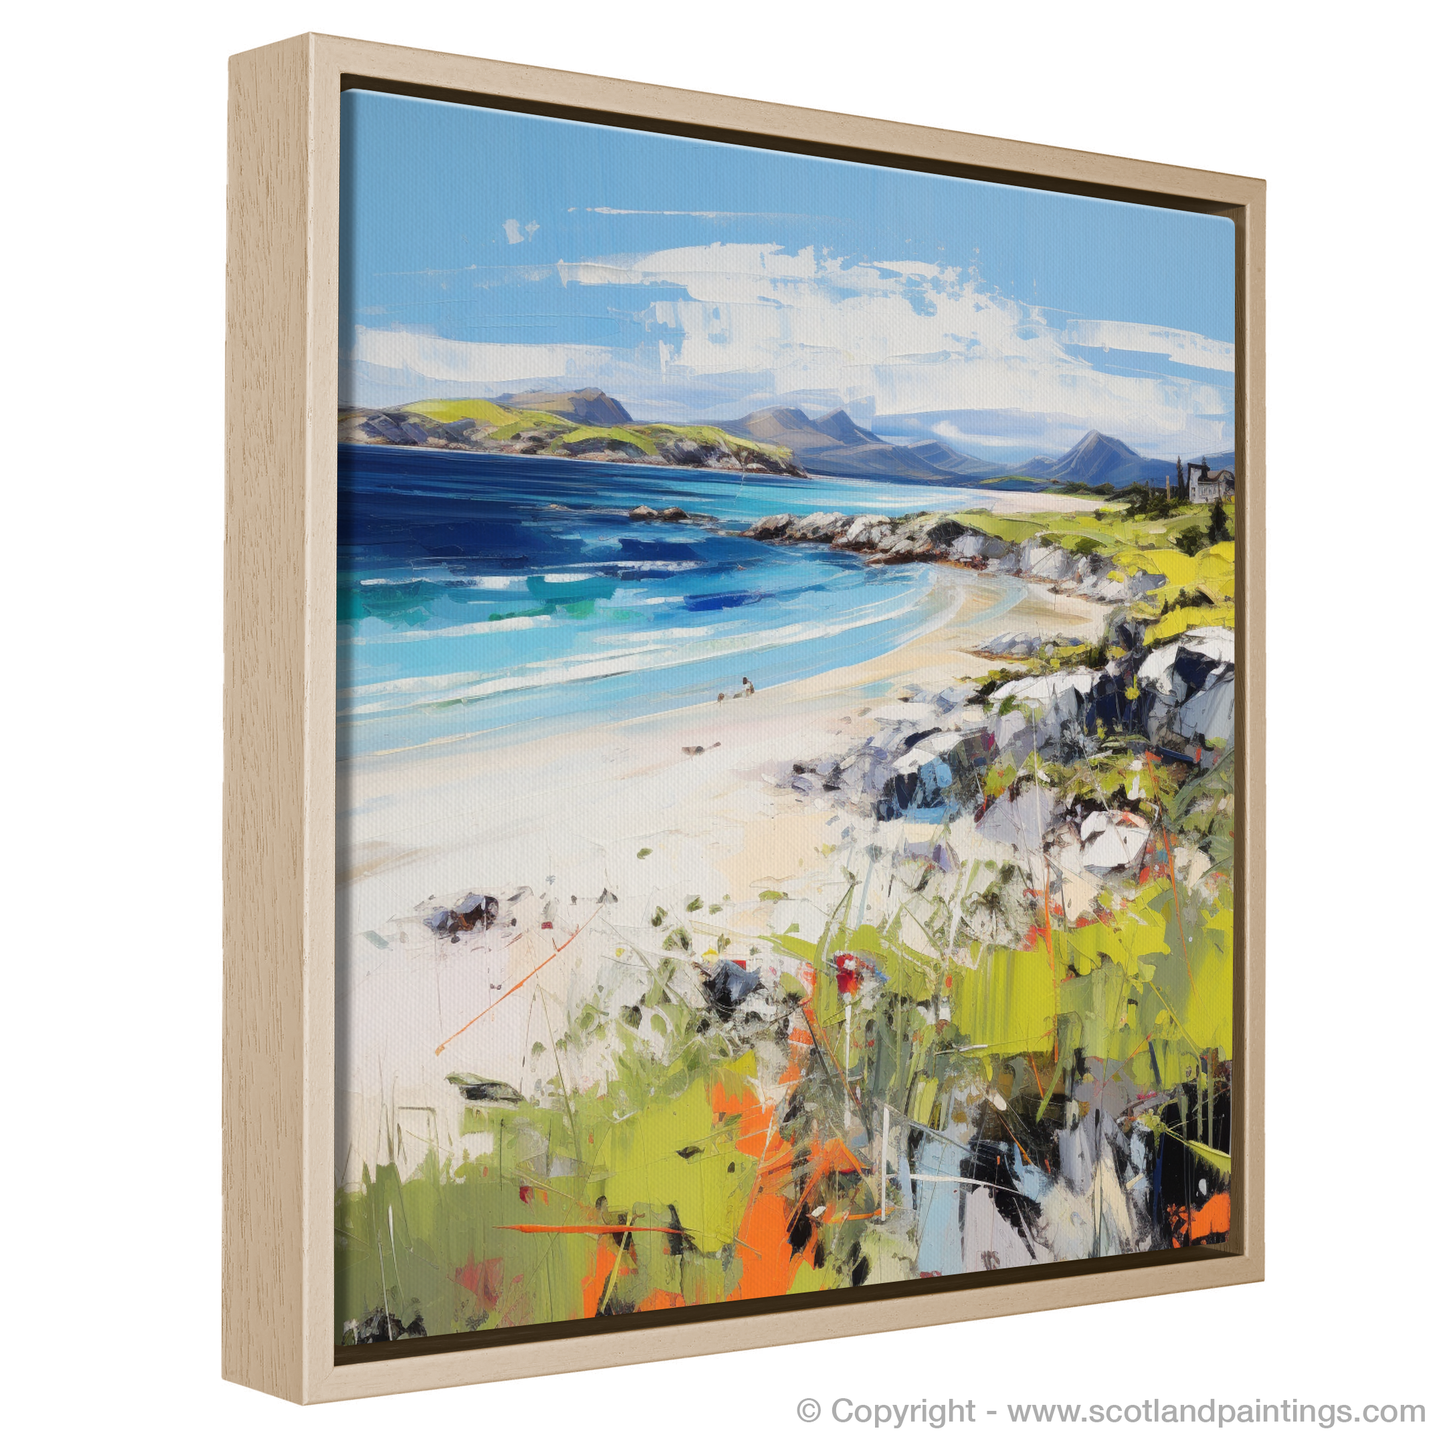 Painting and Art Print of Camusdarach Beach, Arisaig entitled "Wild Allure of Camusdarach Beach: An Expressionist Odyssey".